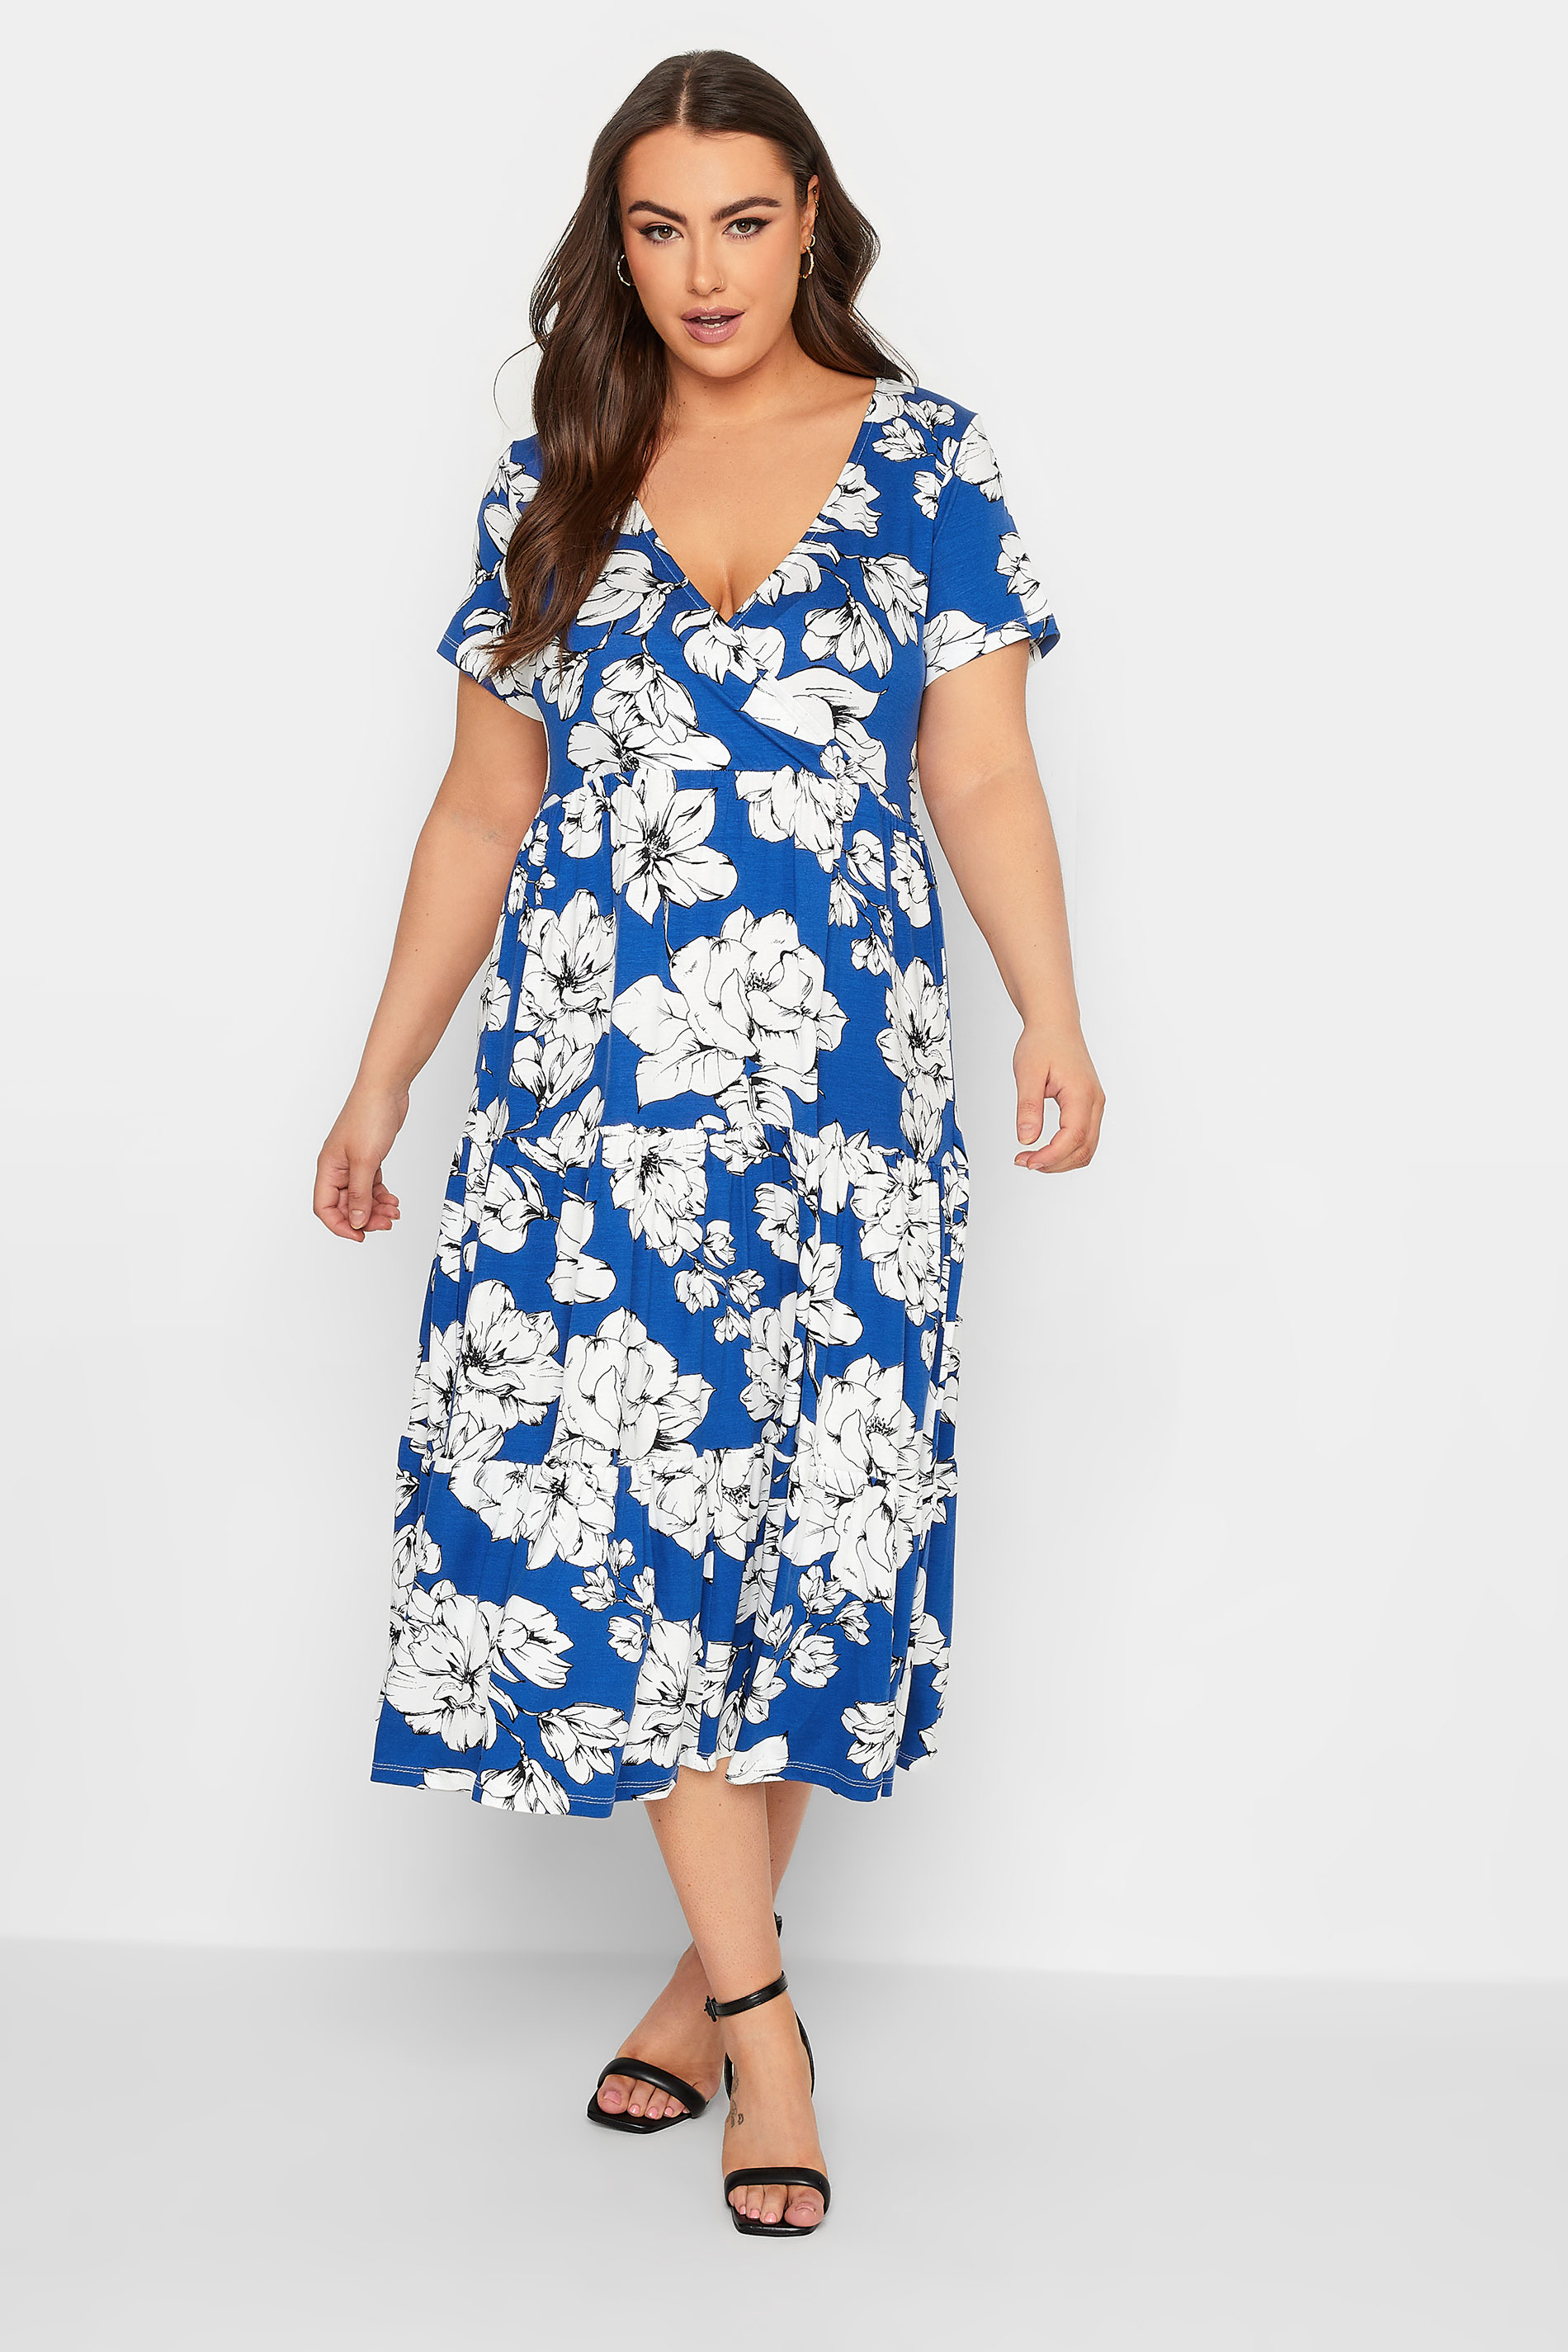 YOURS Plus Size Curve Cobalt Blue Floral V-Neck Tiered Wrap Dress | Yours Clothing  1